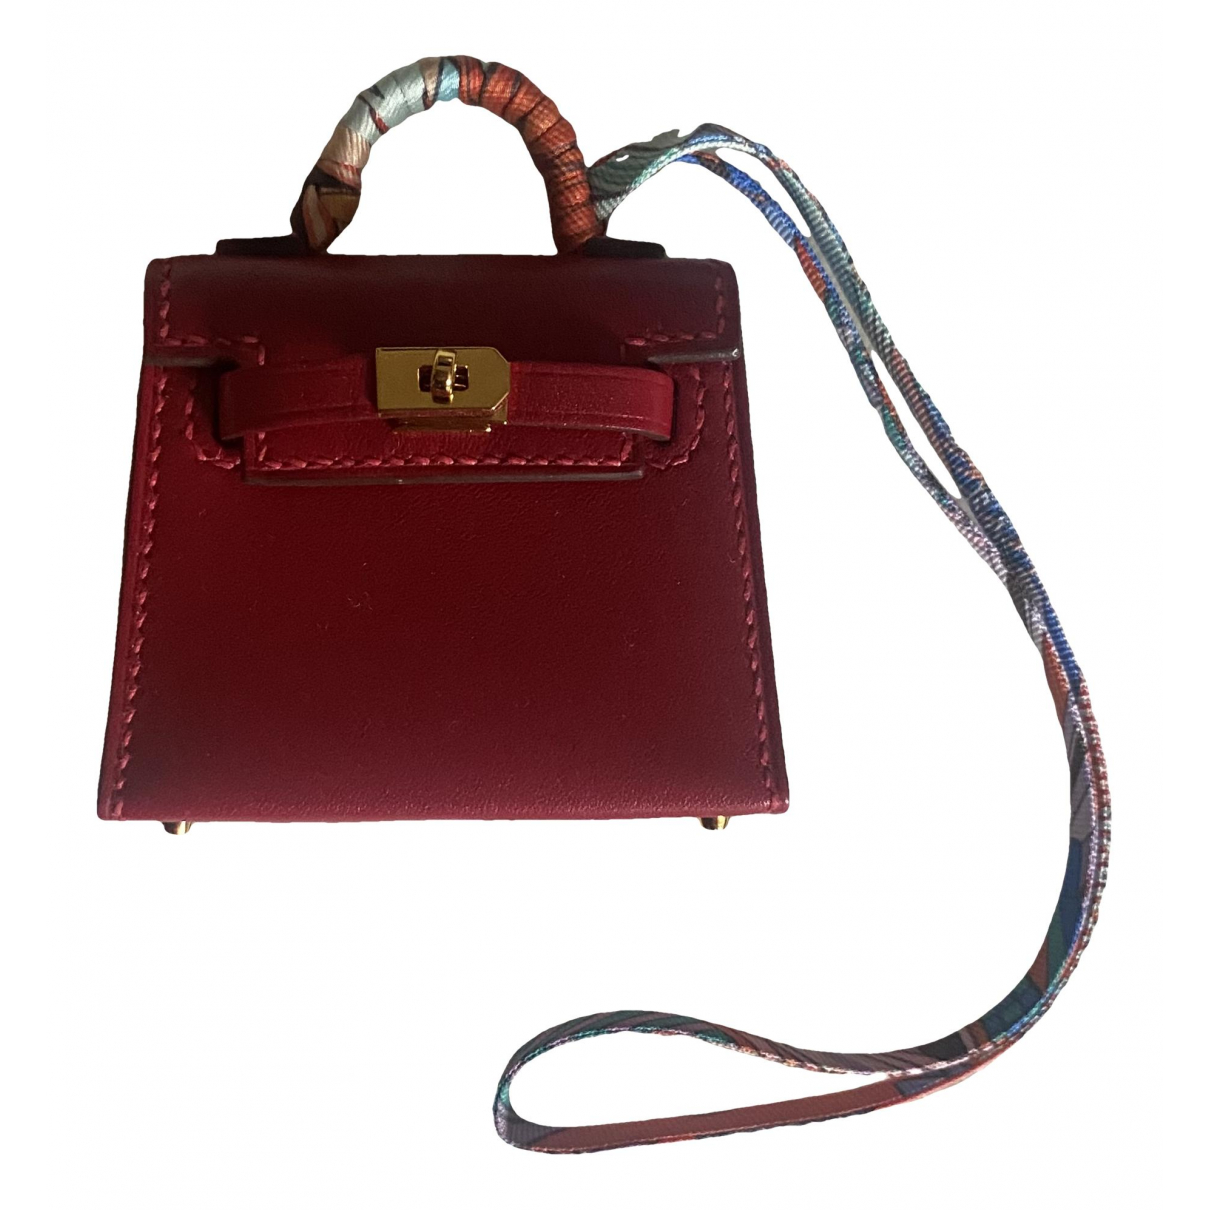 image of Hermès Kelly leather bag charm